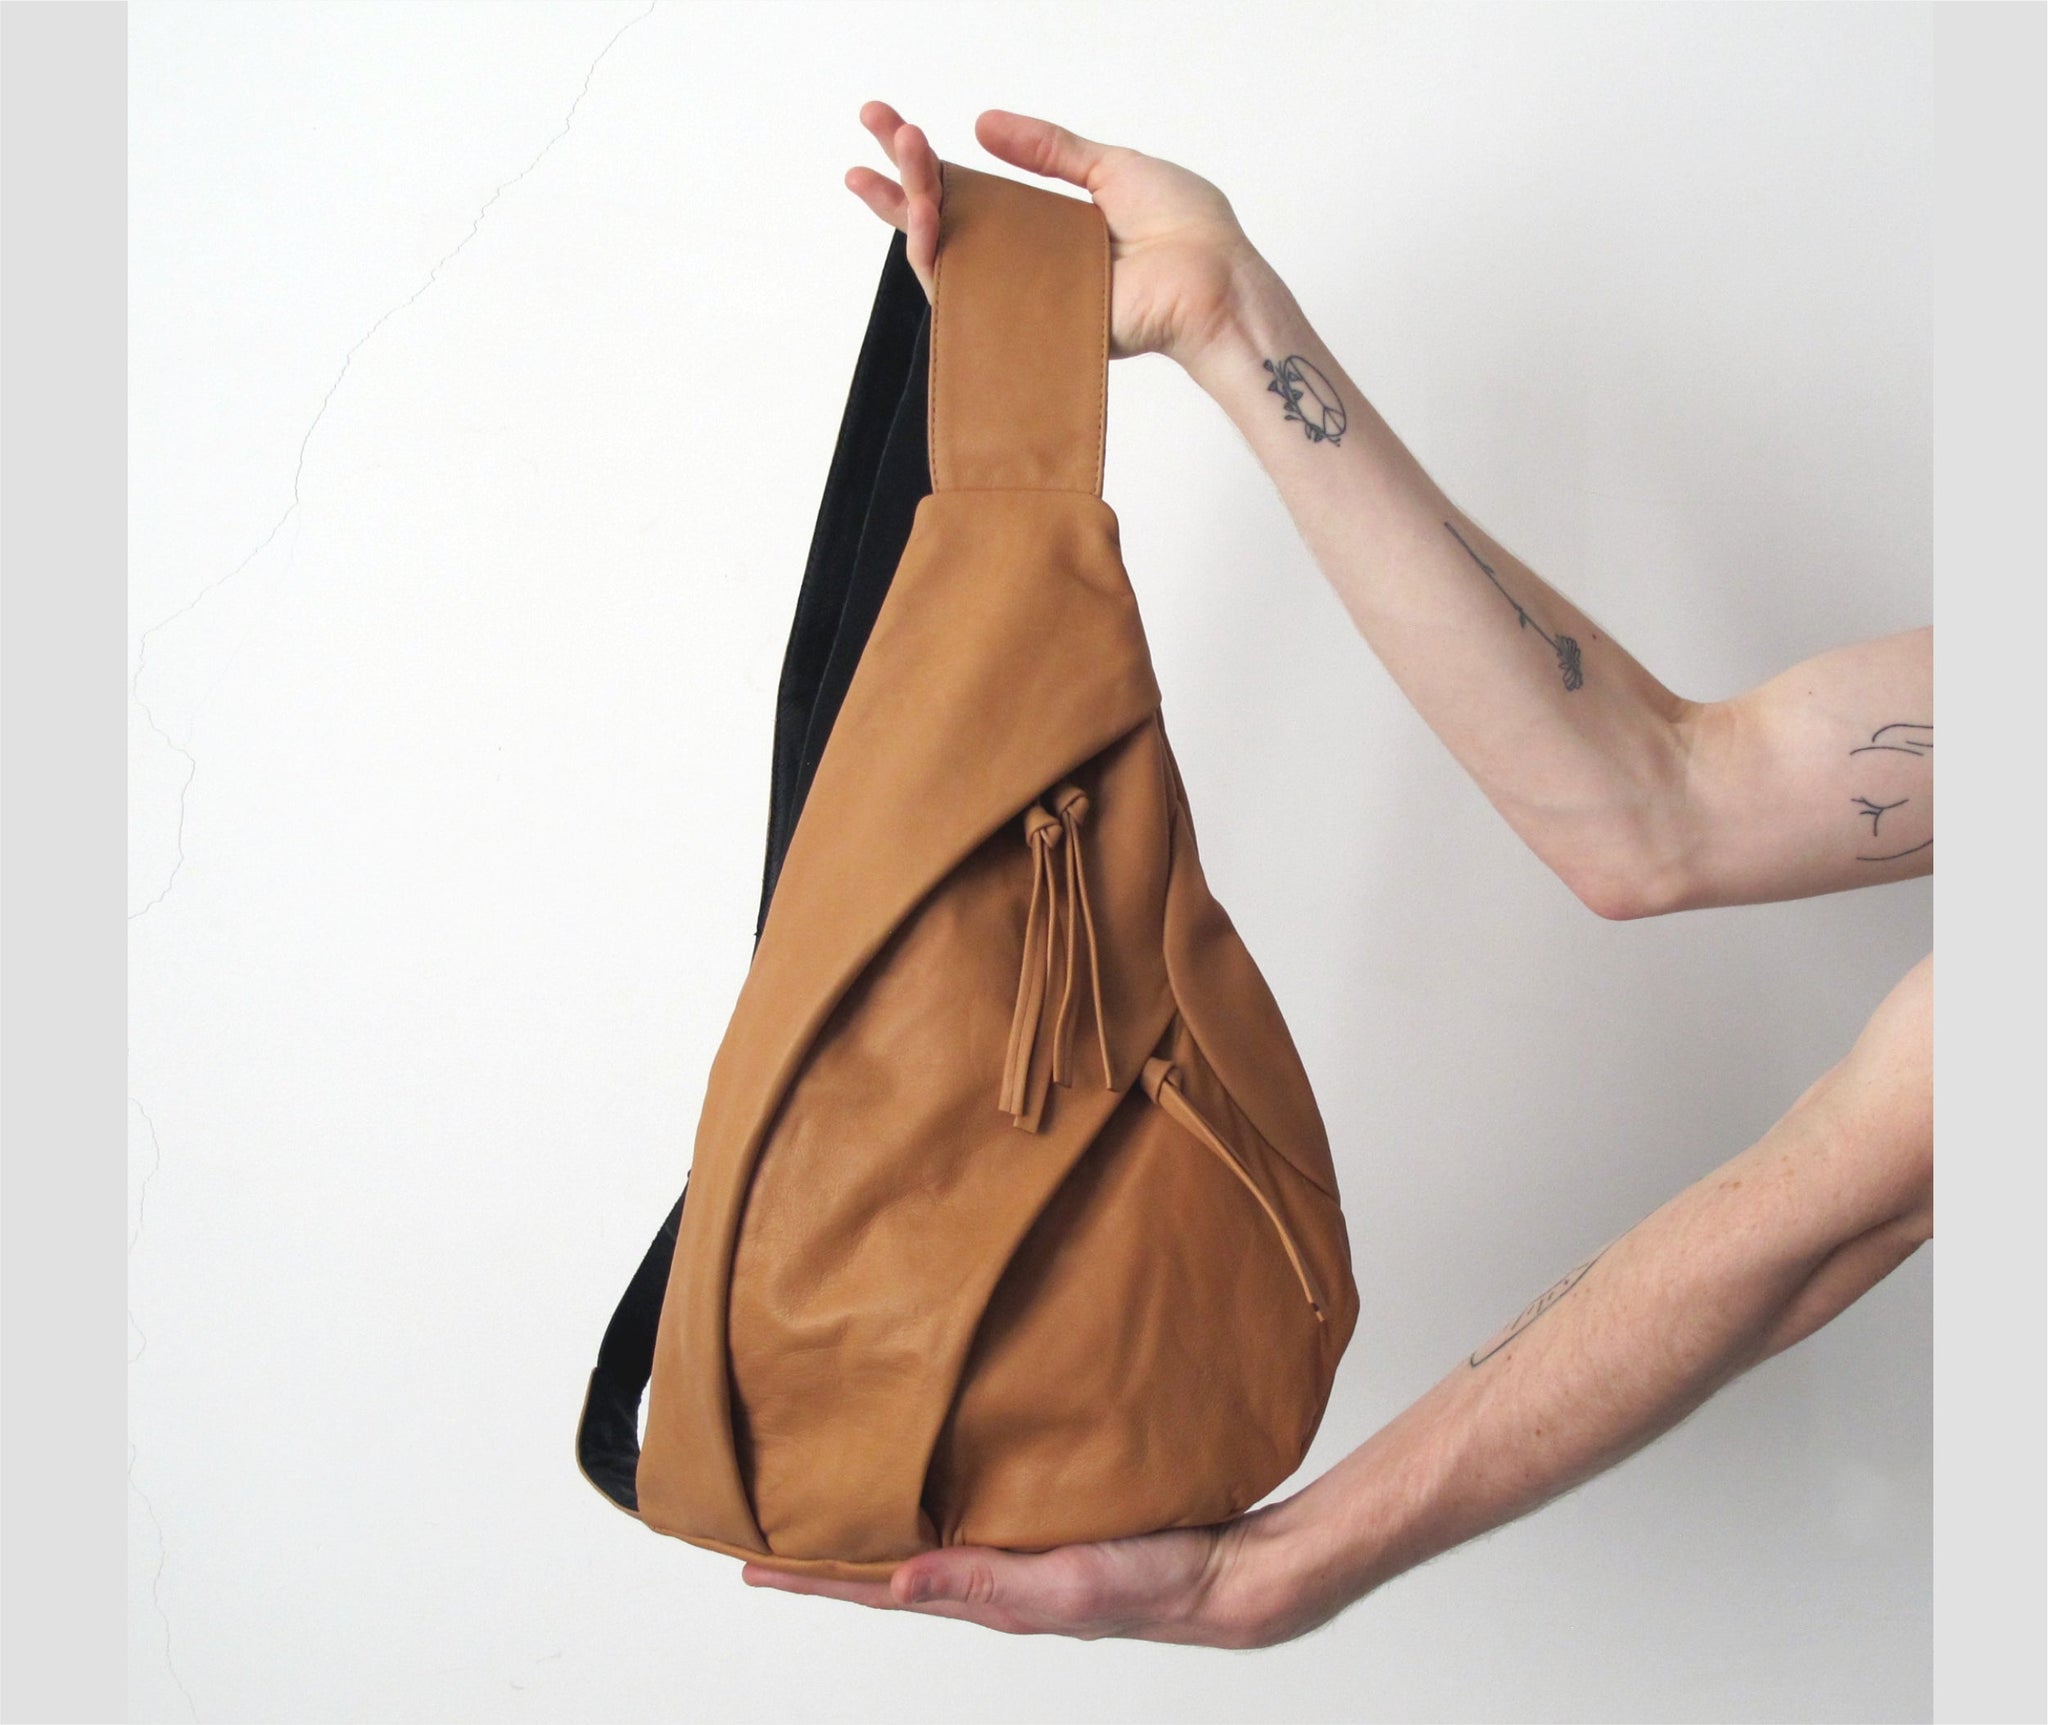 Leather Sling bag - Tan